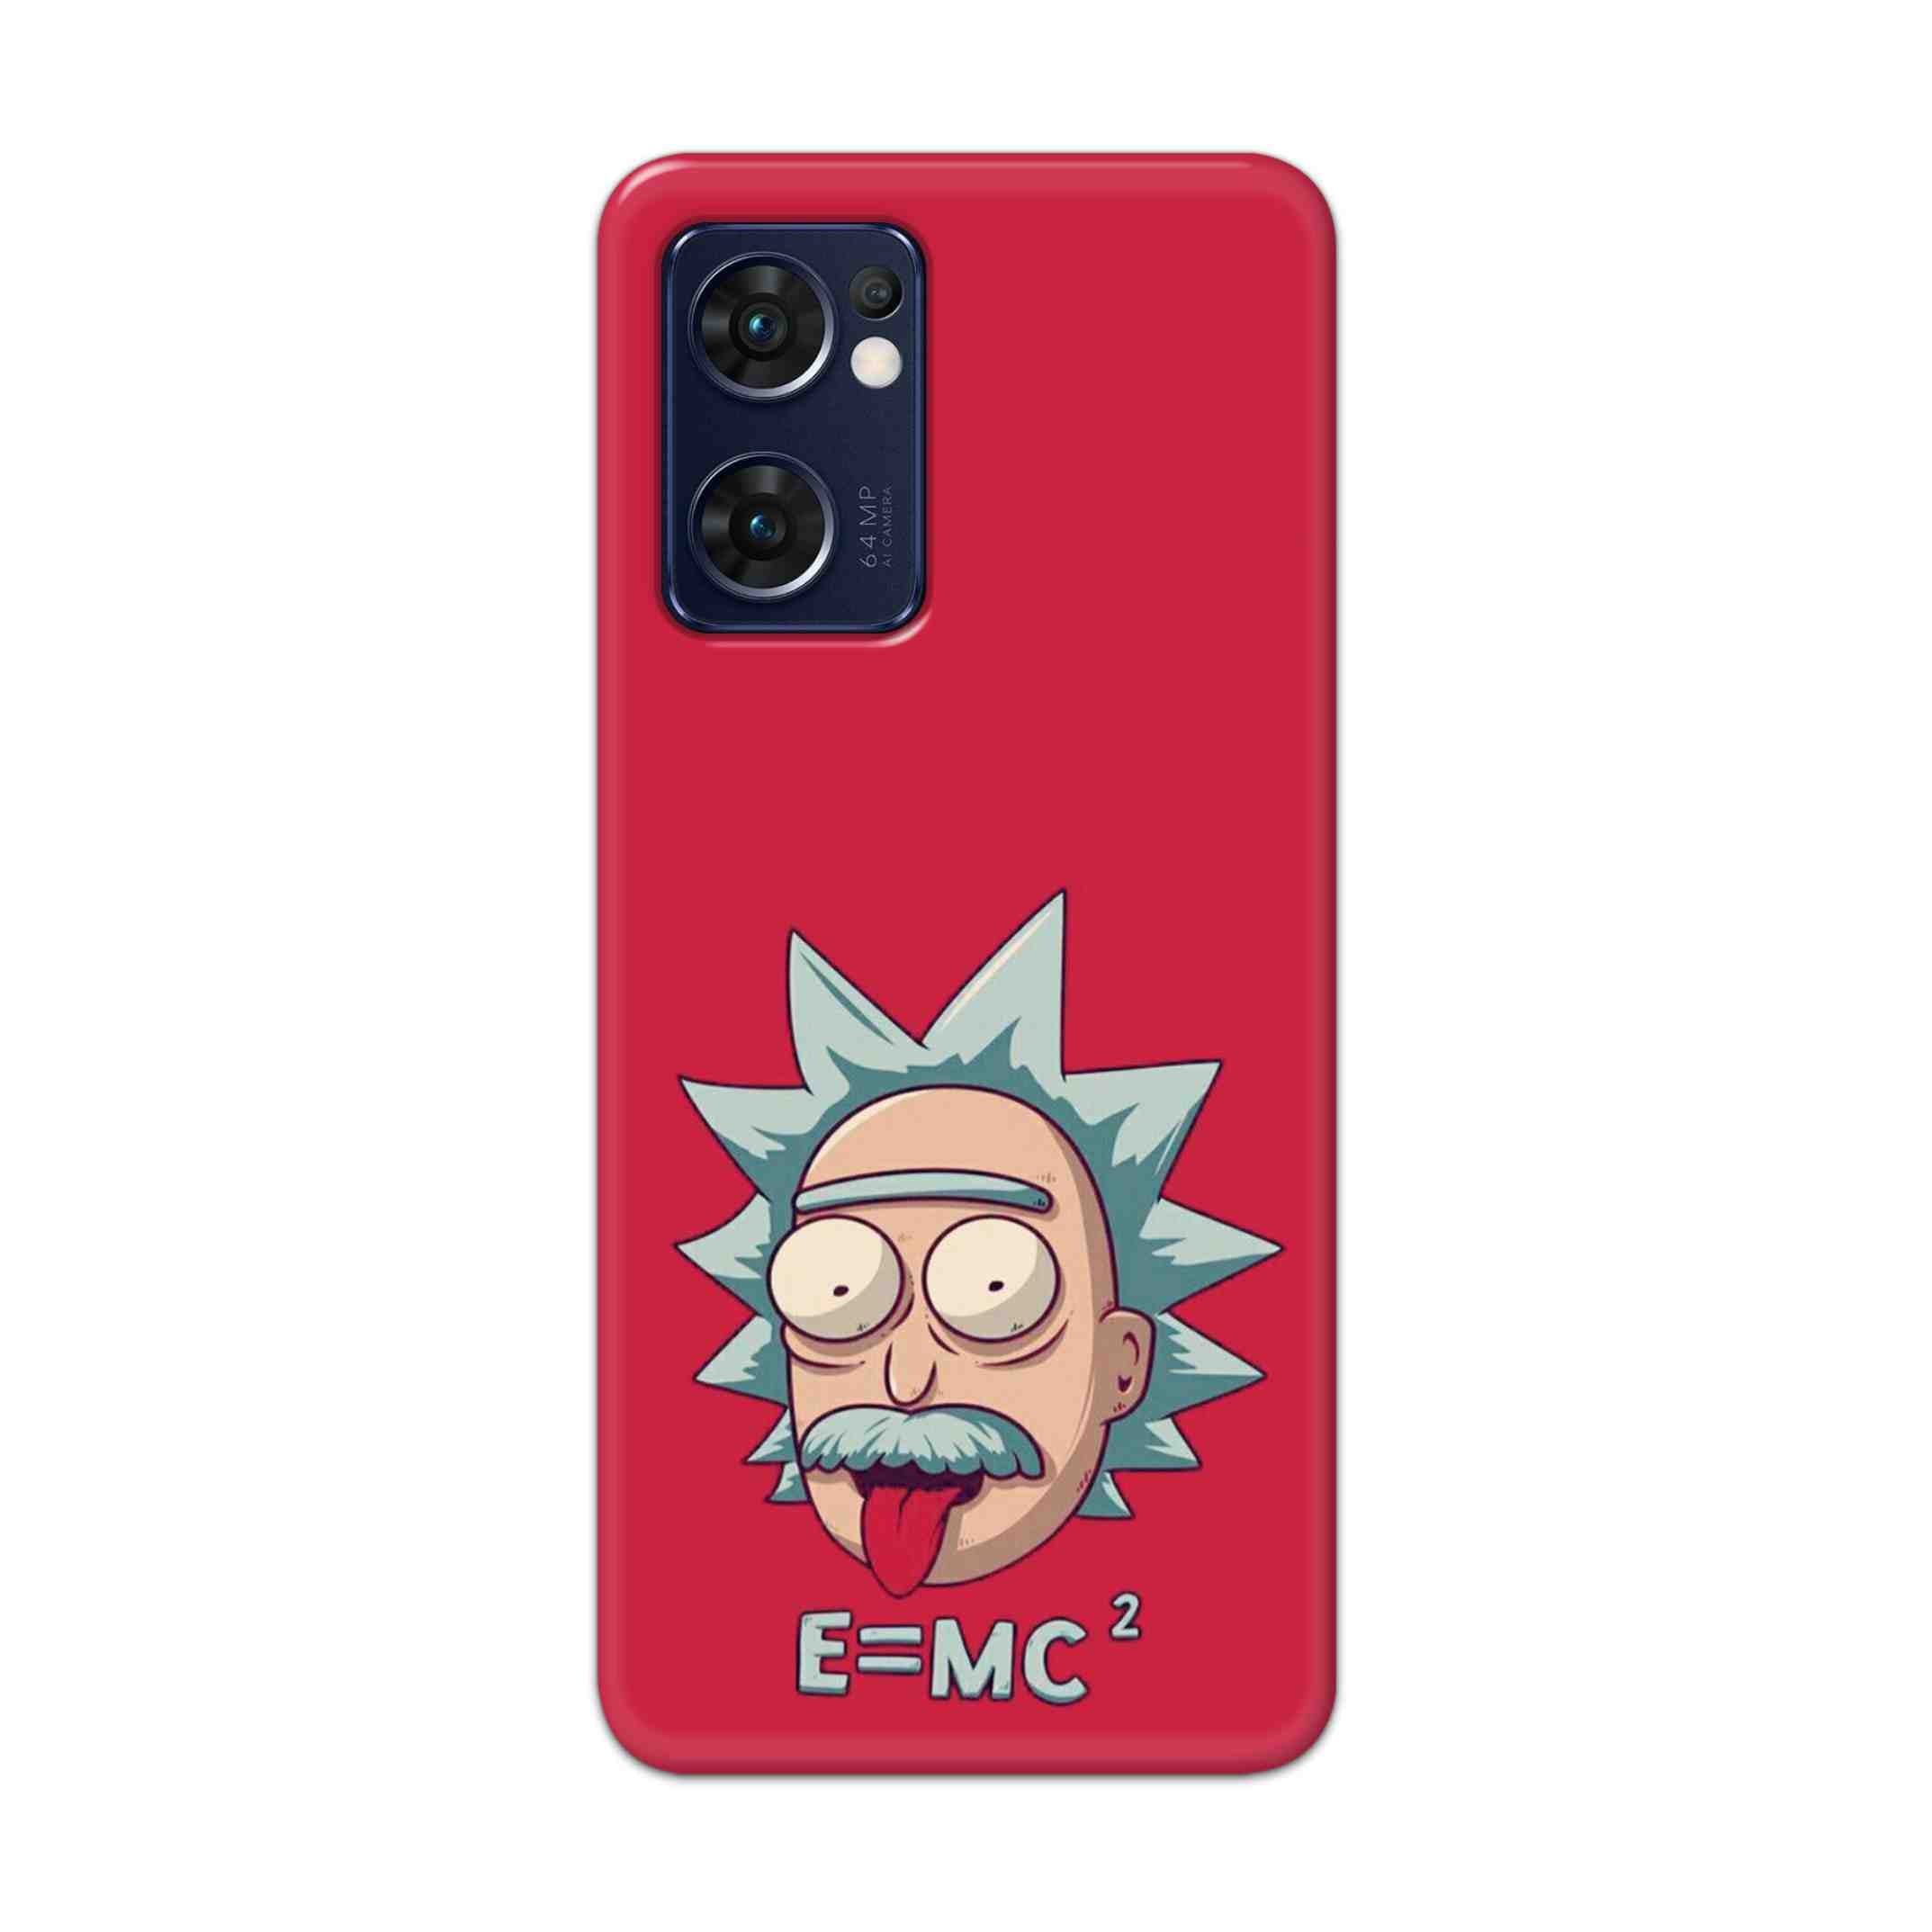 Buy E=Mc Hard Back Mobile Phone Case Cover For Reno 7 5G Online